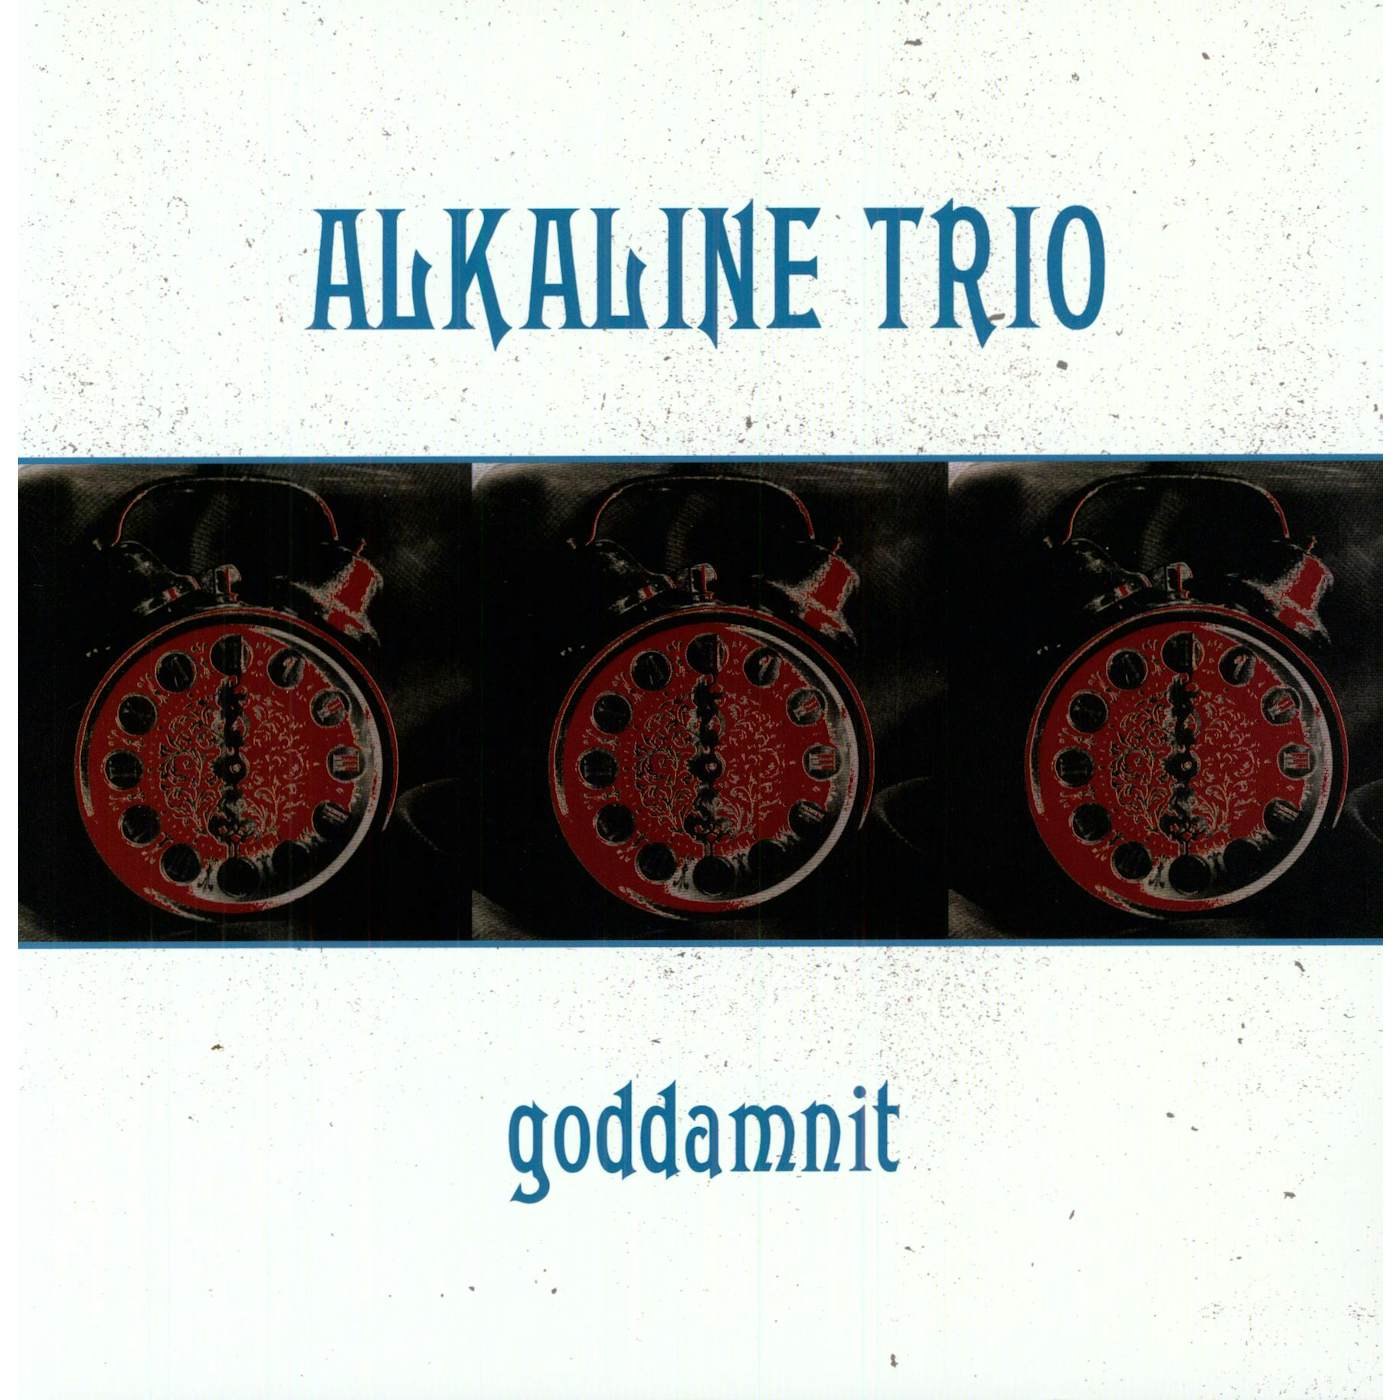 Alkaline Trio Goddamnit Vinyl Record